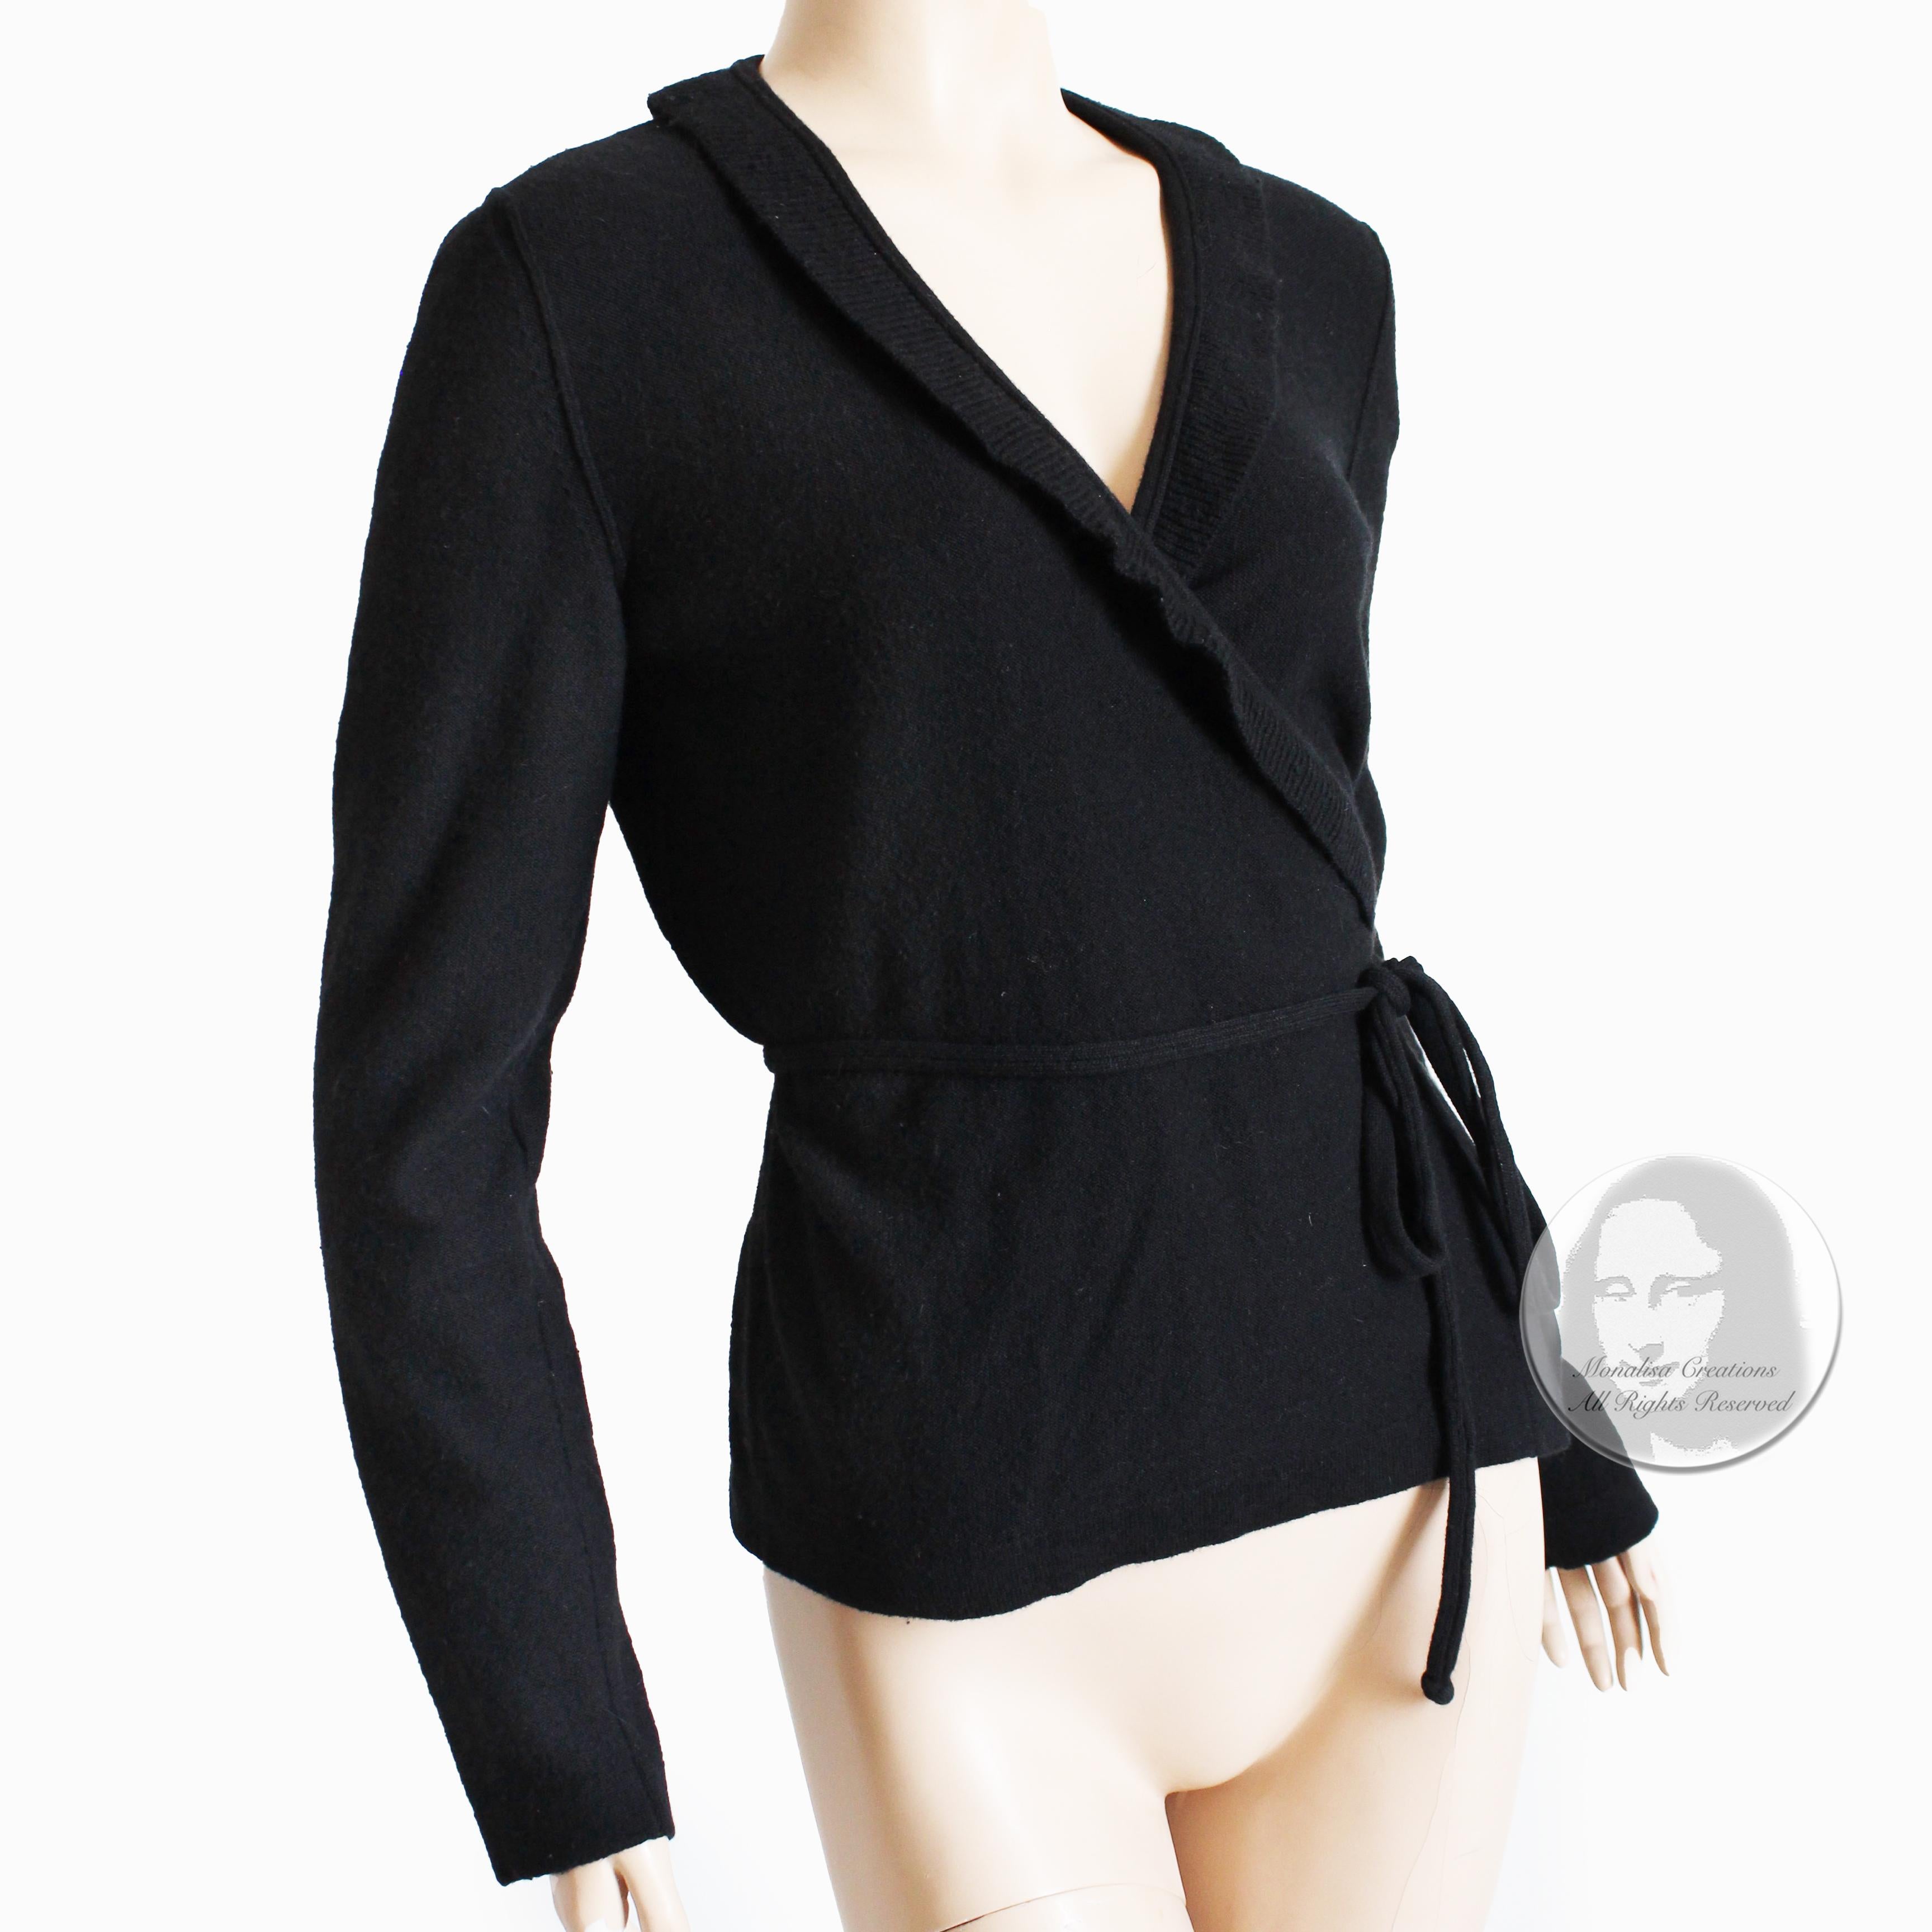 Women's or Men's Sonia Rykiel Sweater Wrap Style Black Wool Angora Knit Cardigan Vintage 90s 40